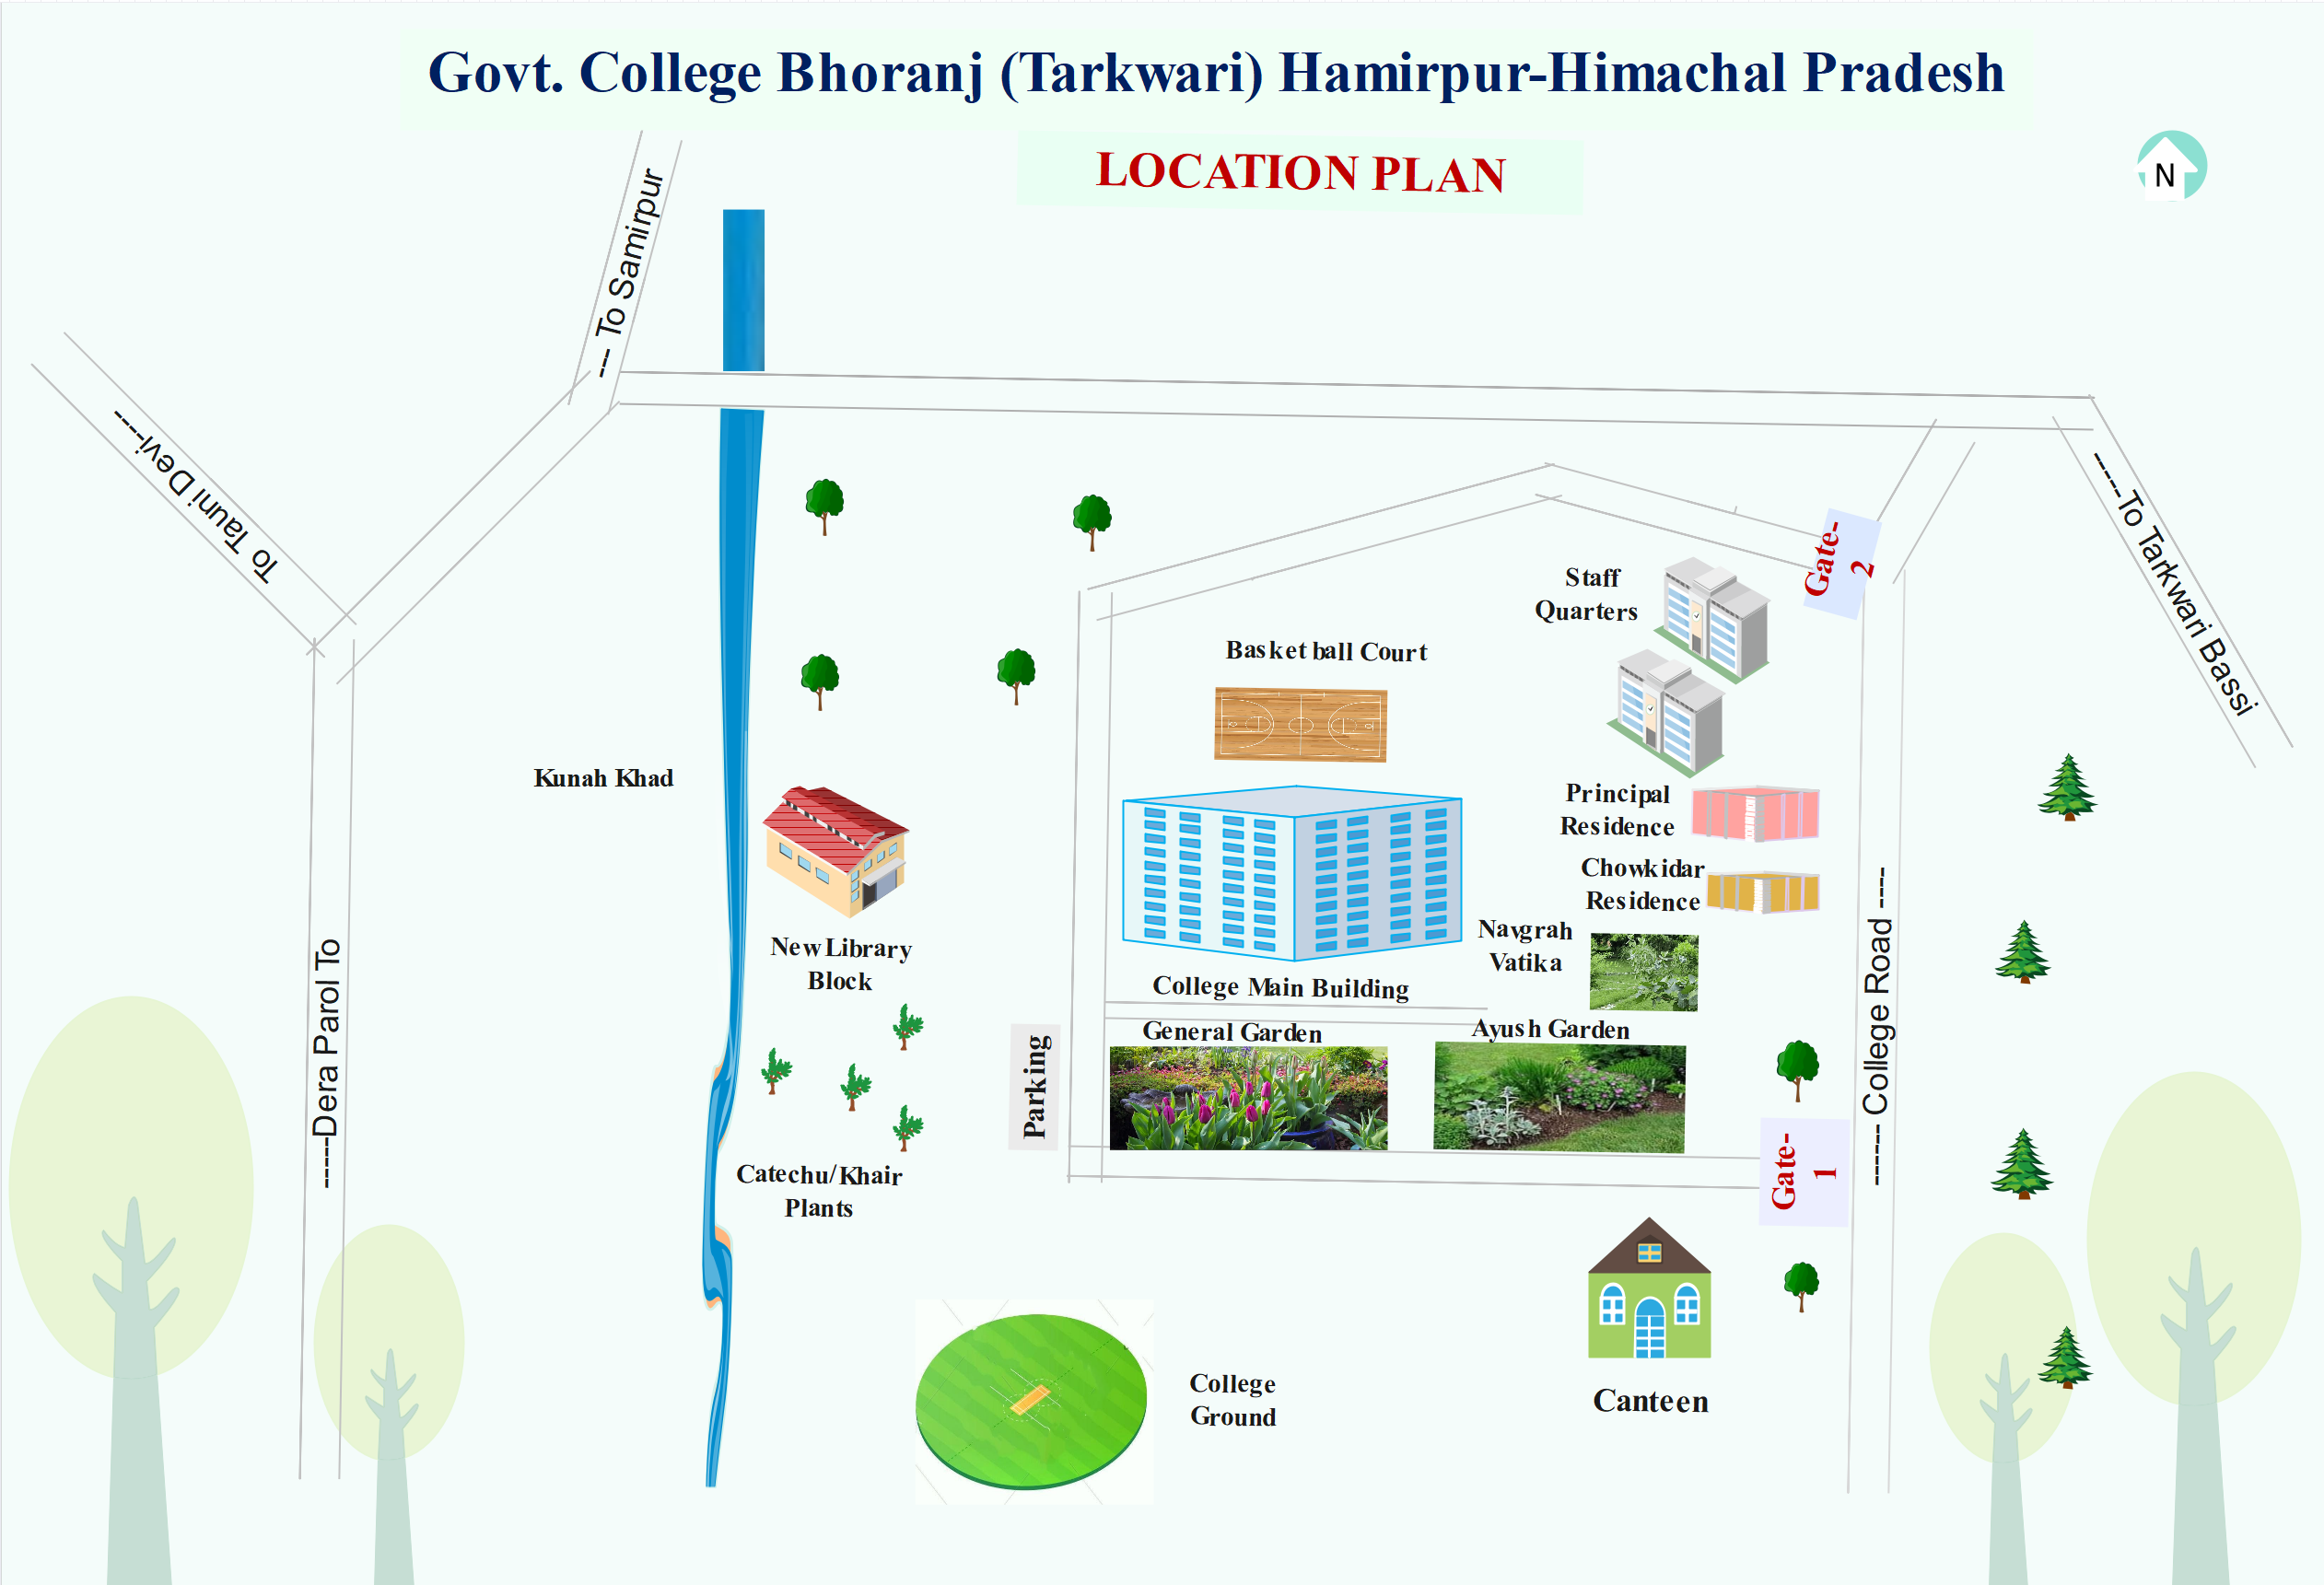 Govt. College Bhoranj Location Plan